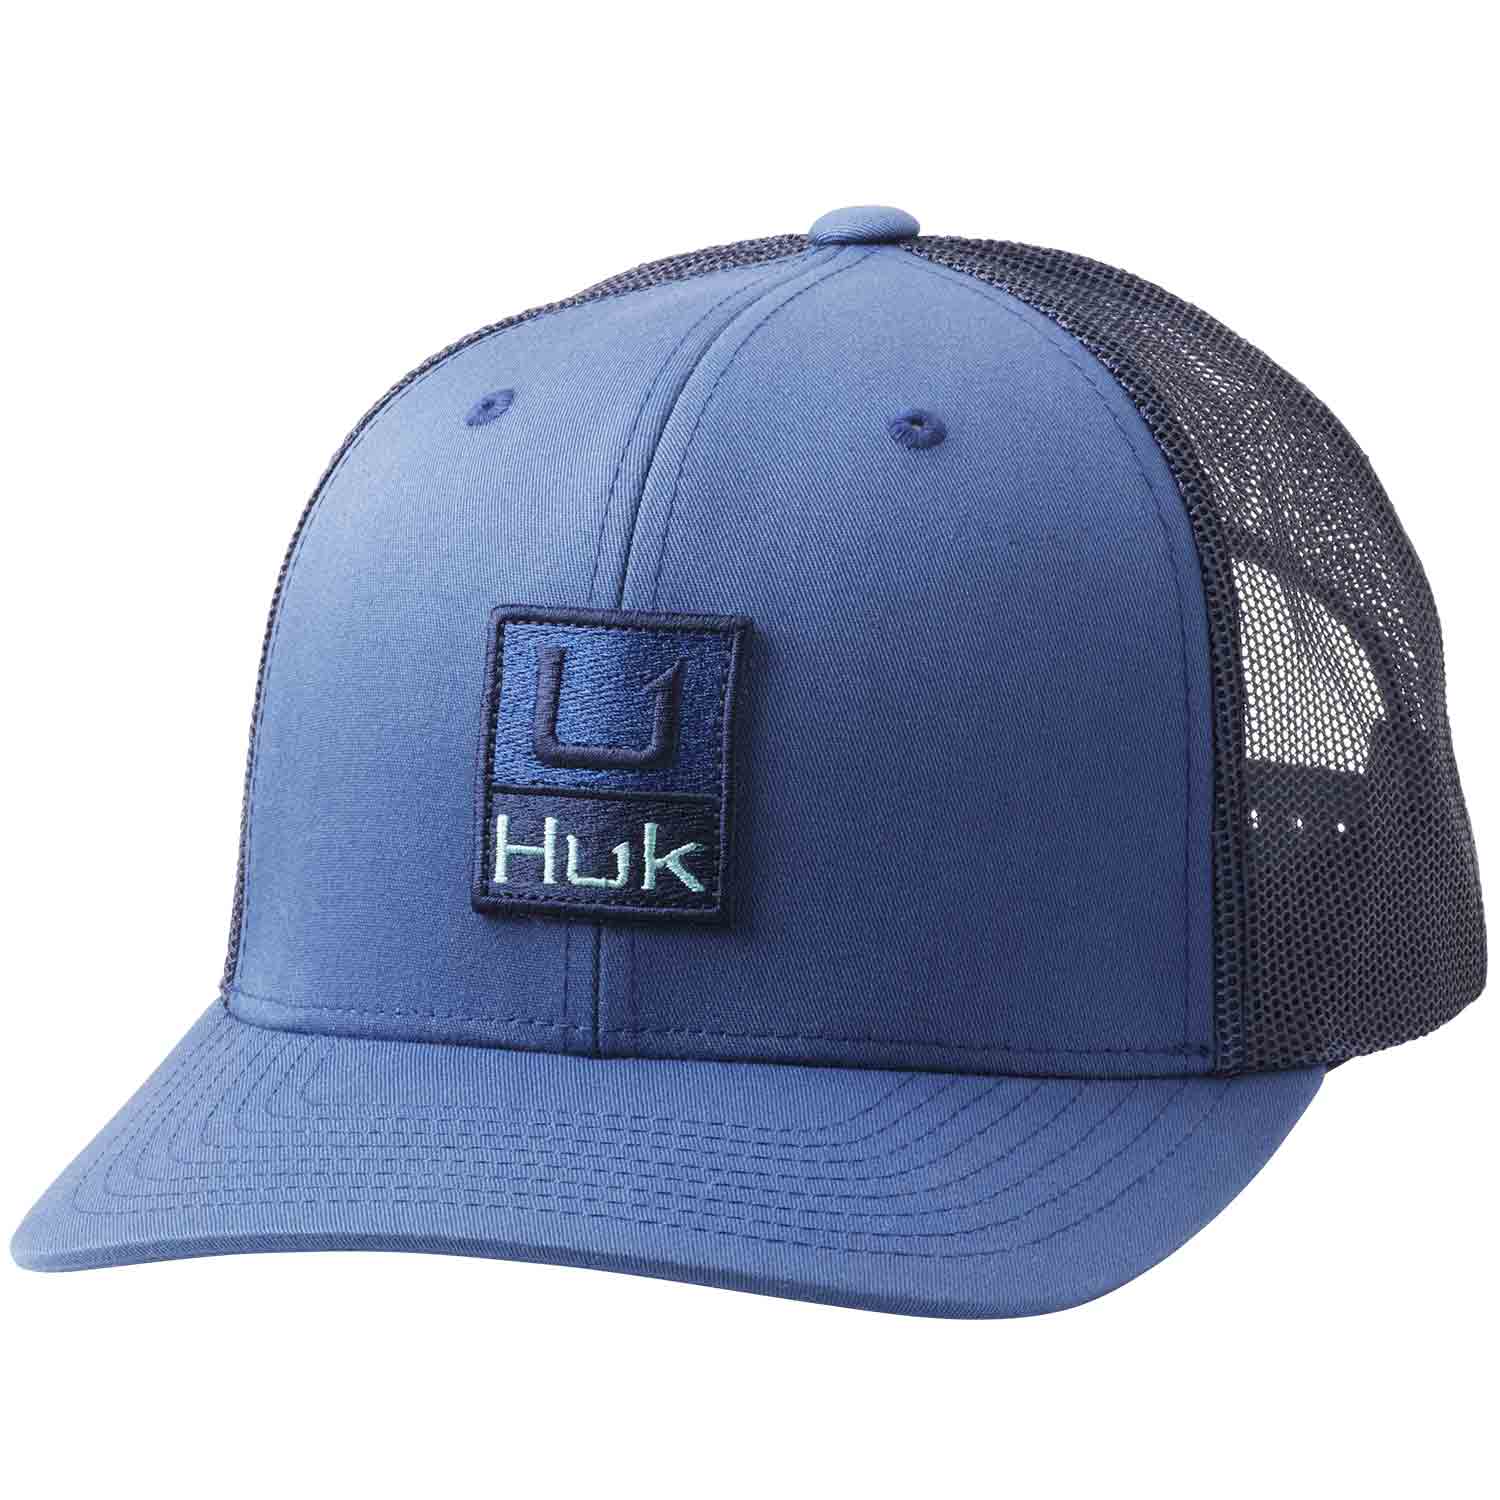 Huk'd Up Trucker Hat